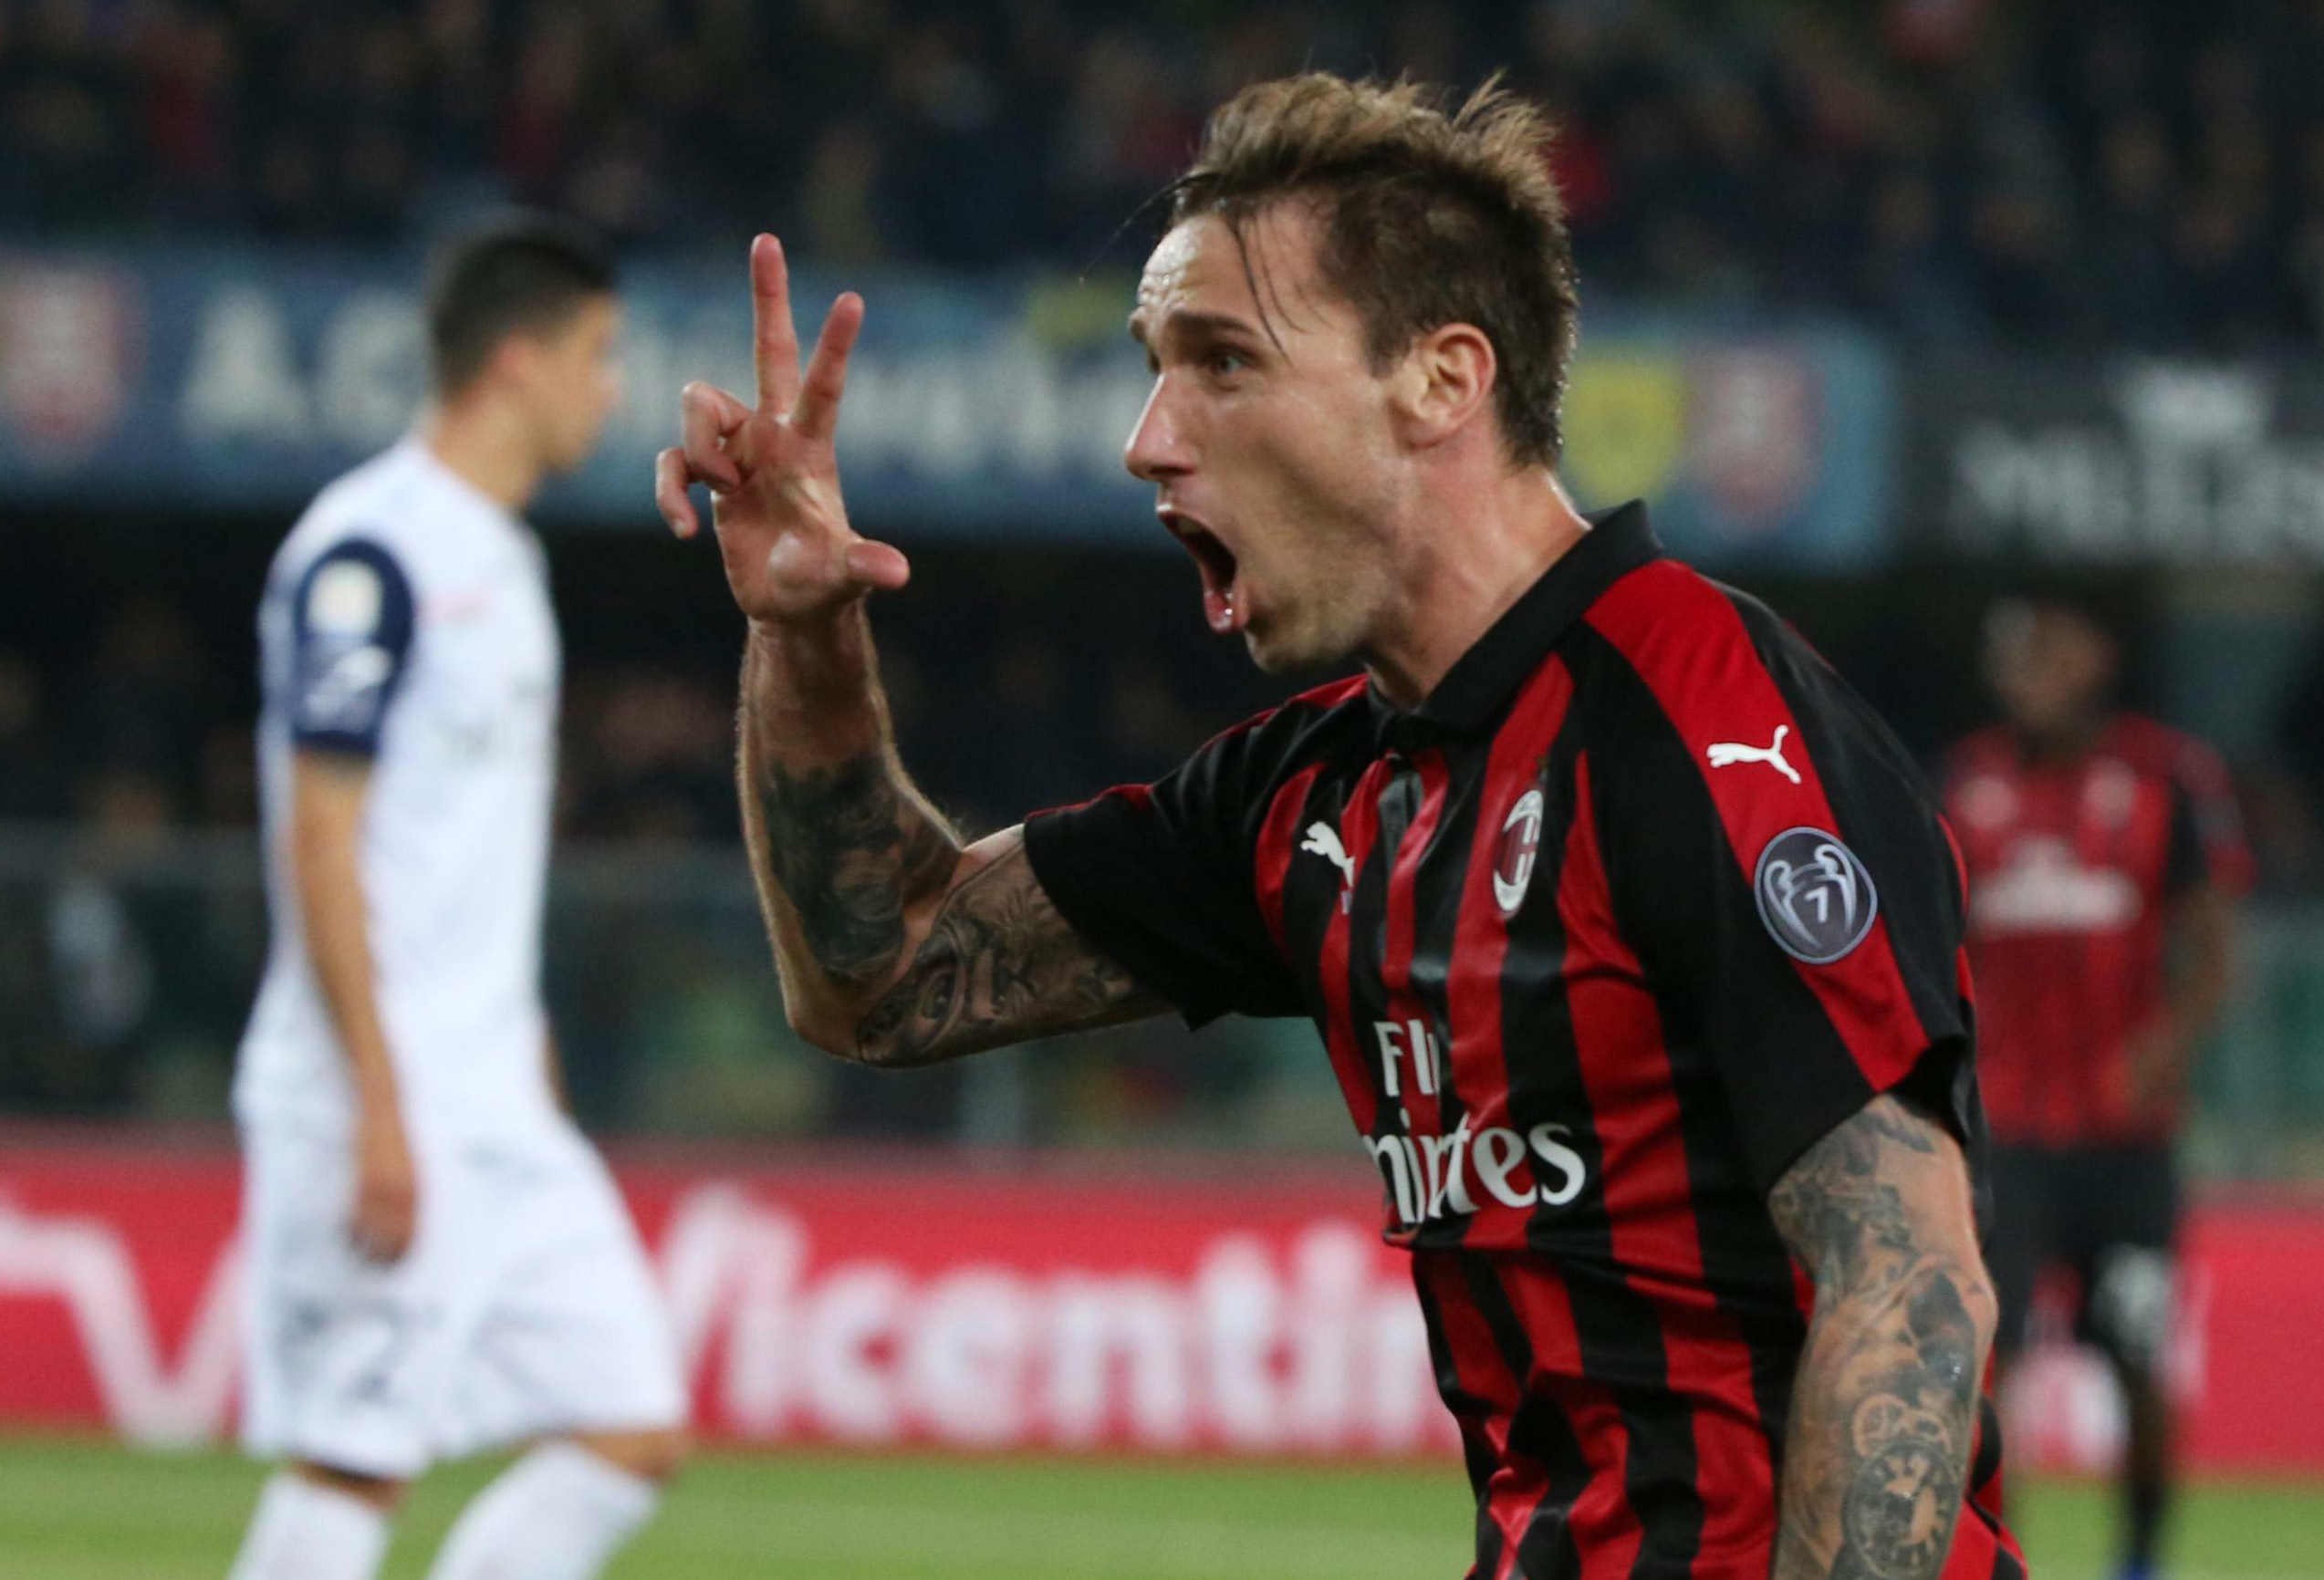 Piatek scores again as Milan wins 2-1 at Chievo in Serie A